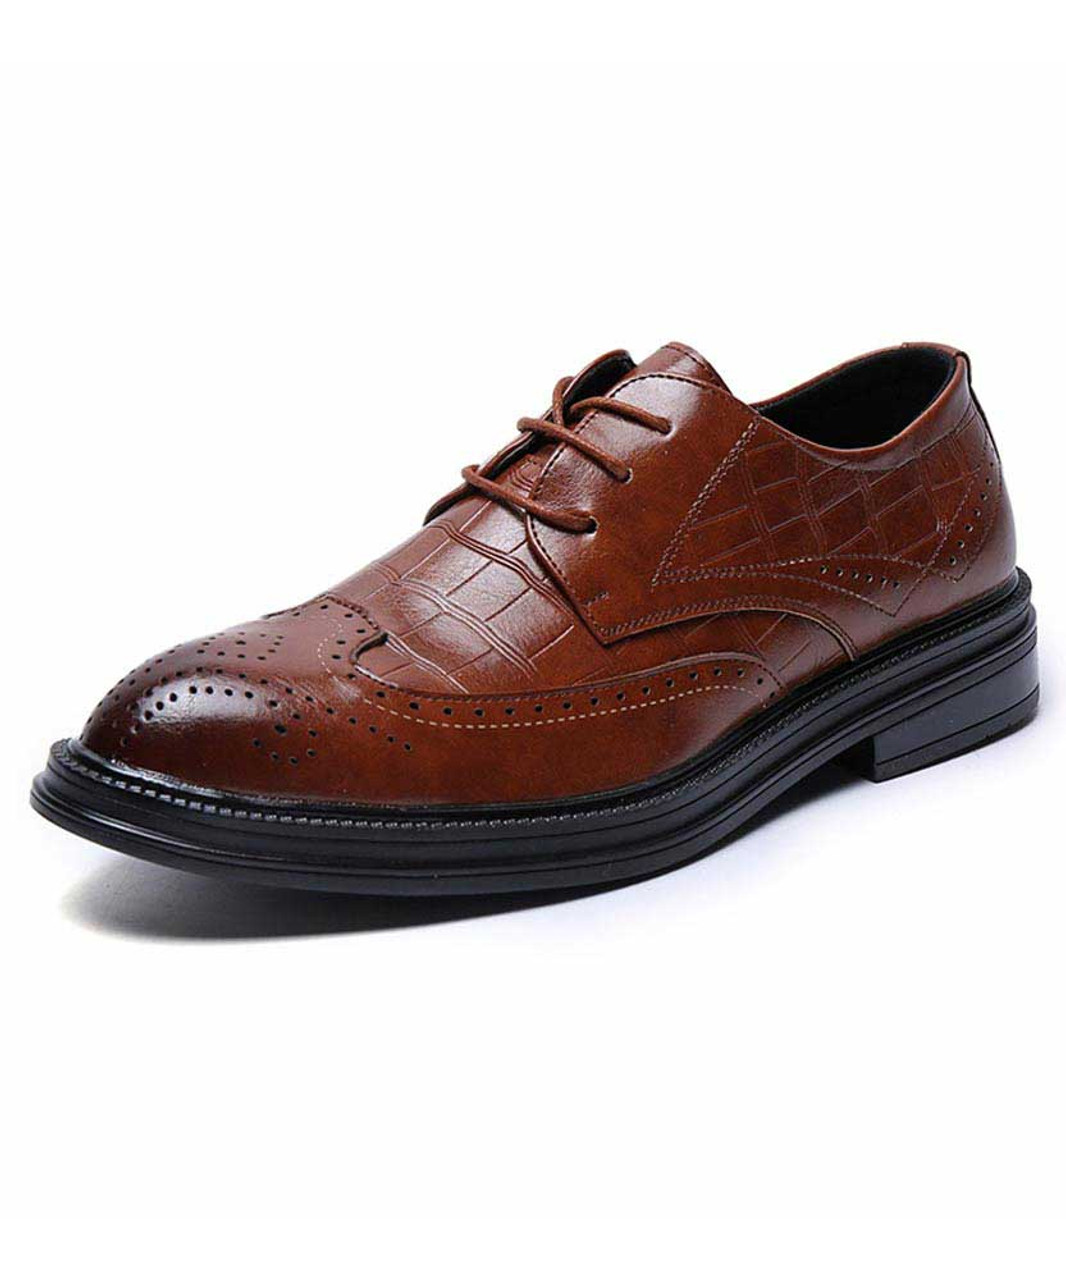 Brown check brogue derby dress shoe | Mens dress shoes online 2089MS